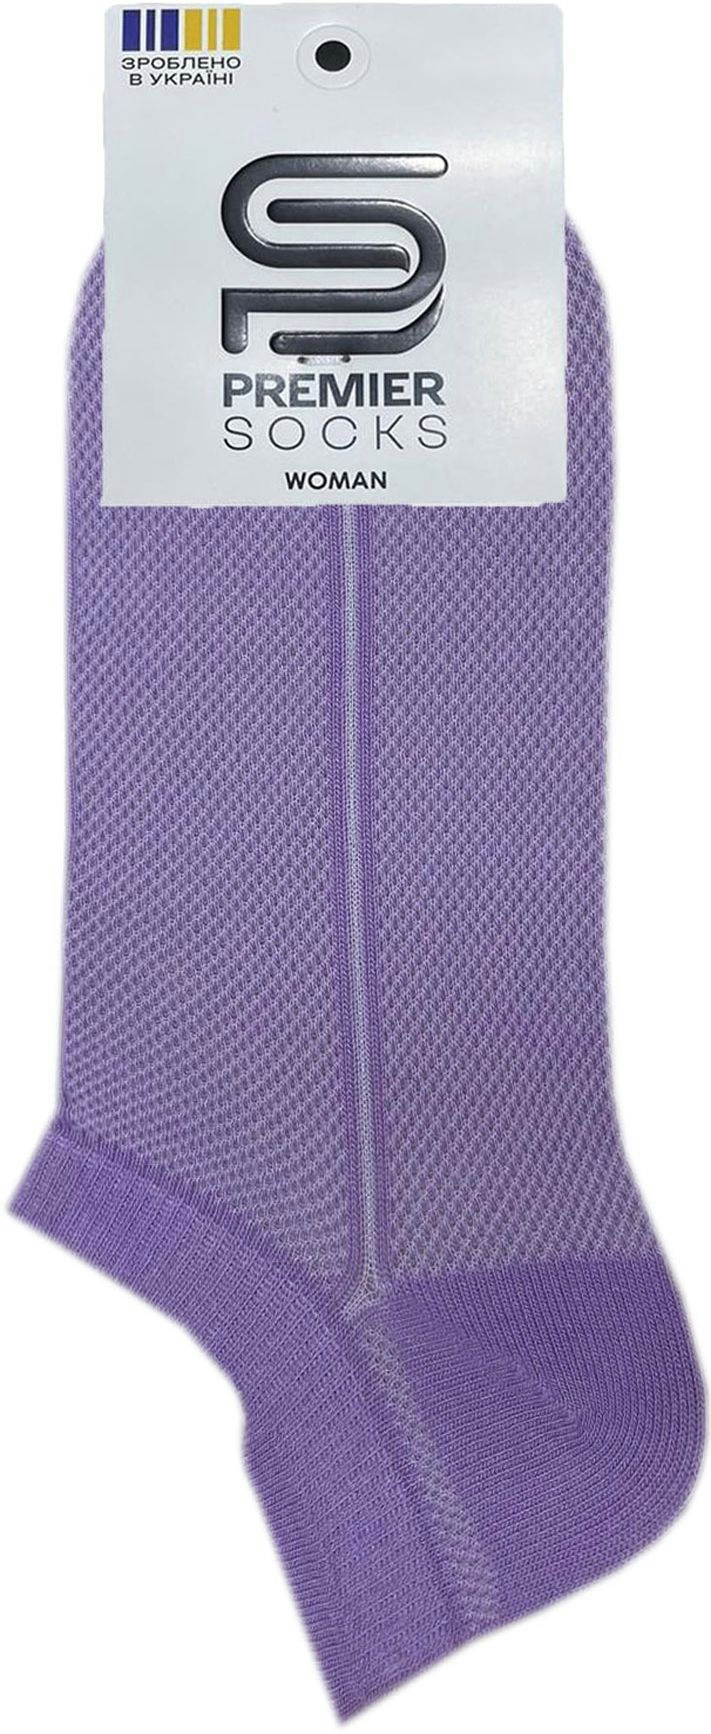 Носки женские Premier Socks 36-40 1 пара фиолетовые (4820163318752) фото 2